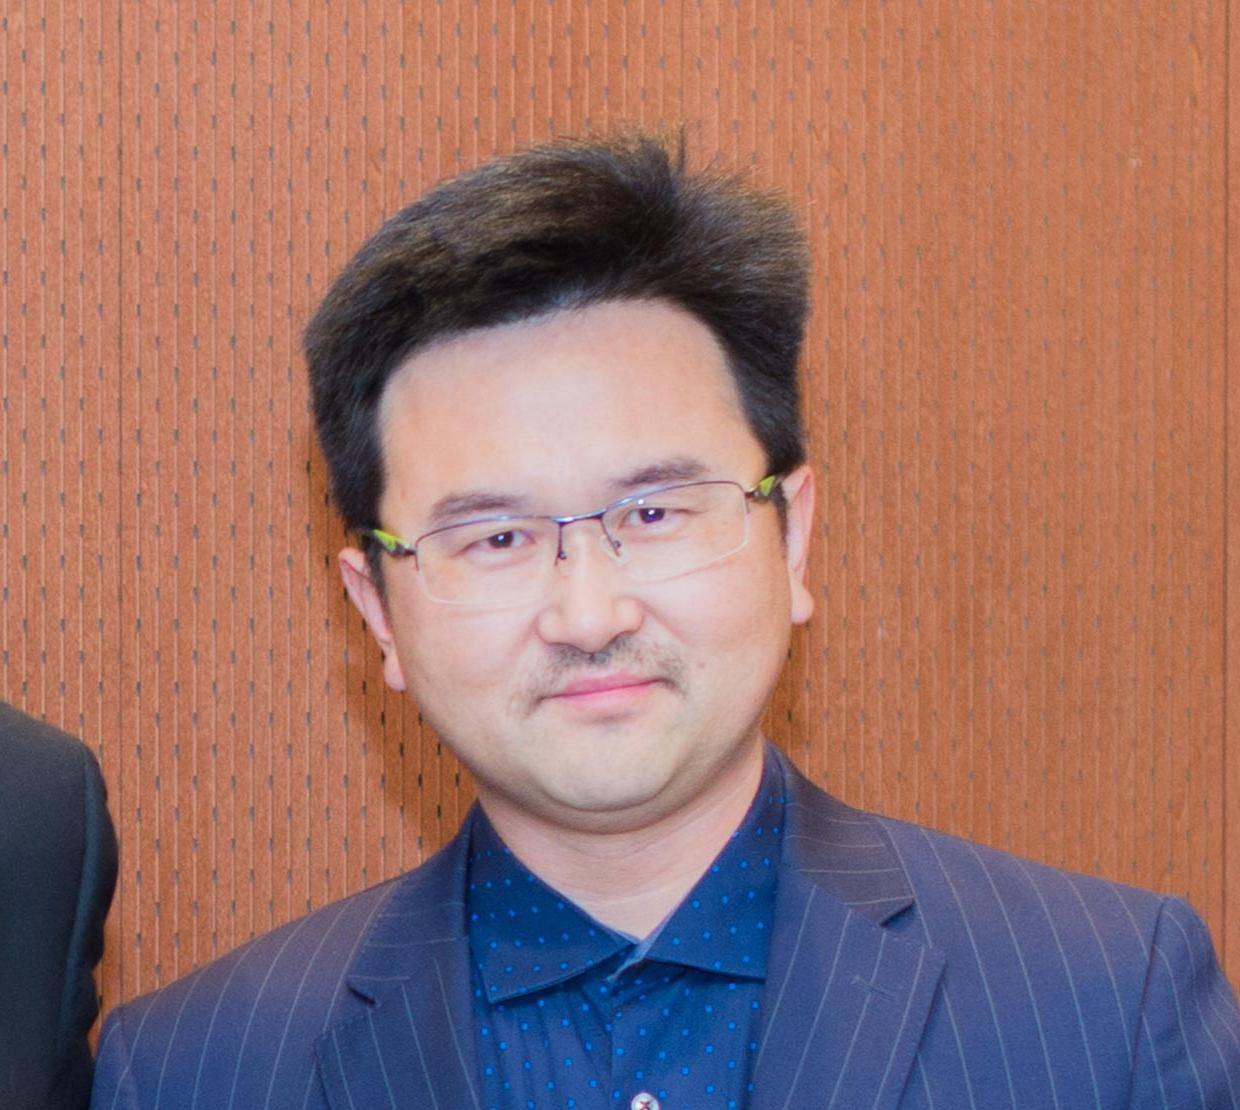 David Xiulei Ji in front of wooden backdrop